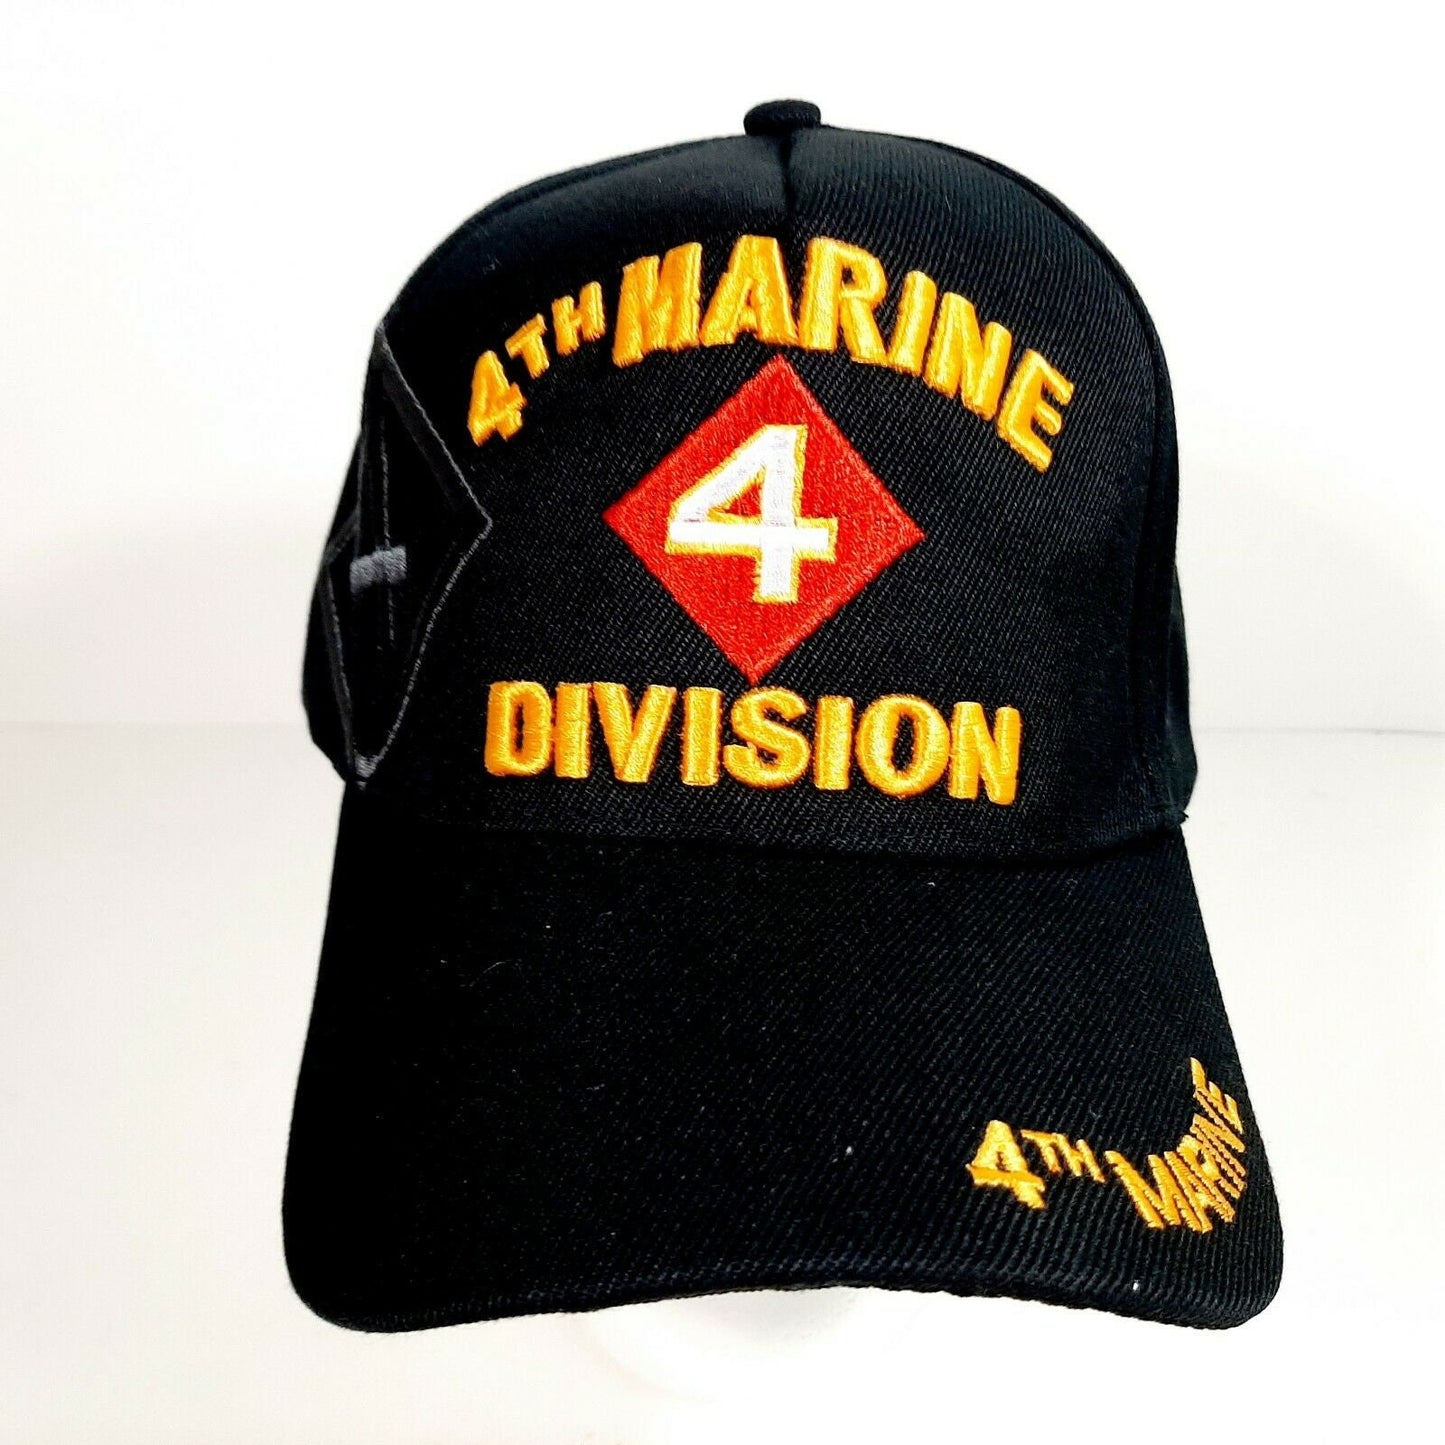 United States Marines 4th Marine Division Men's Ball Cap Hat Black Acrylic